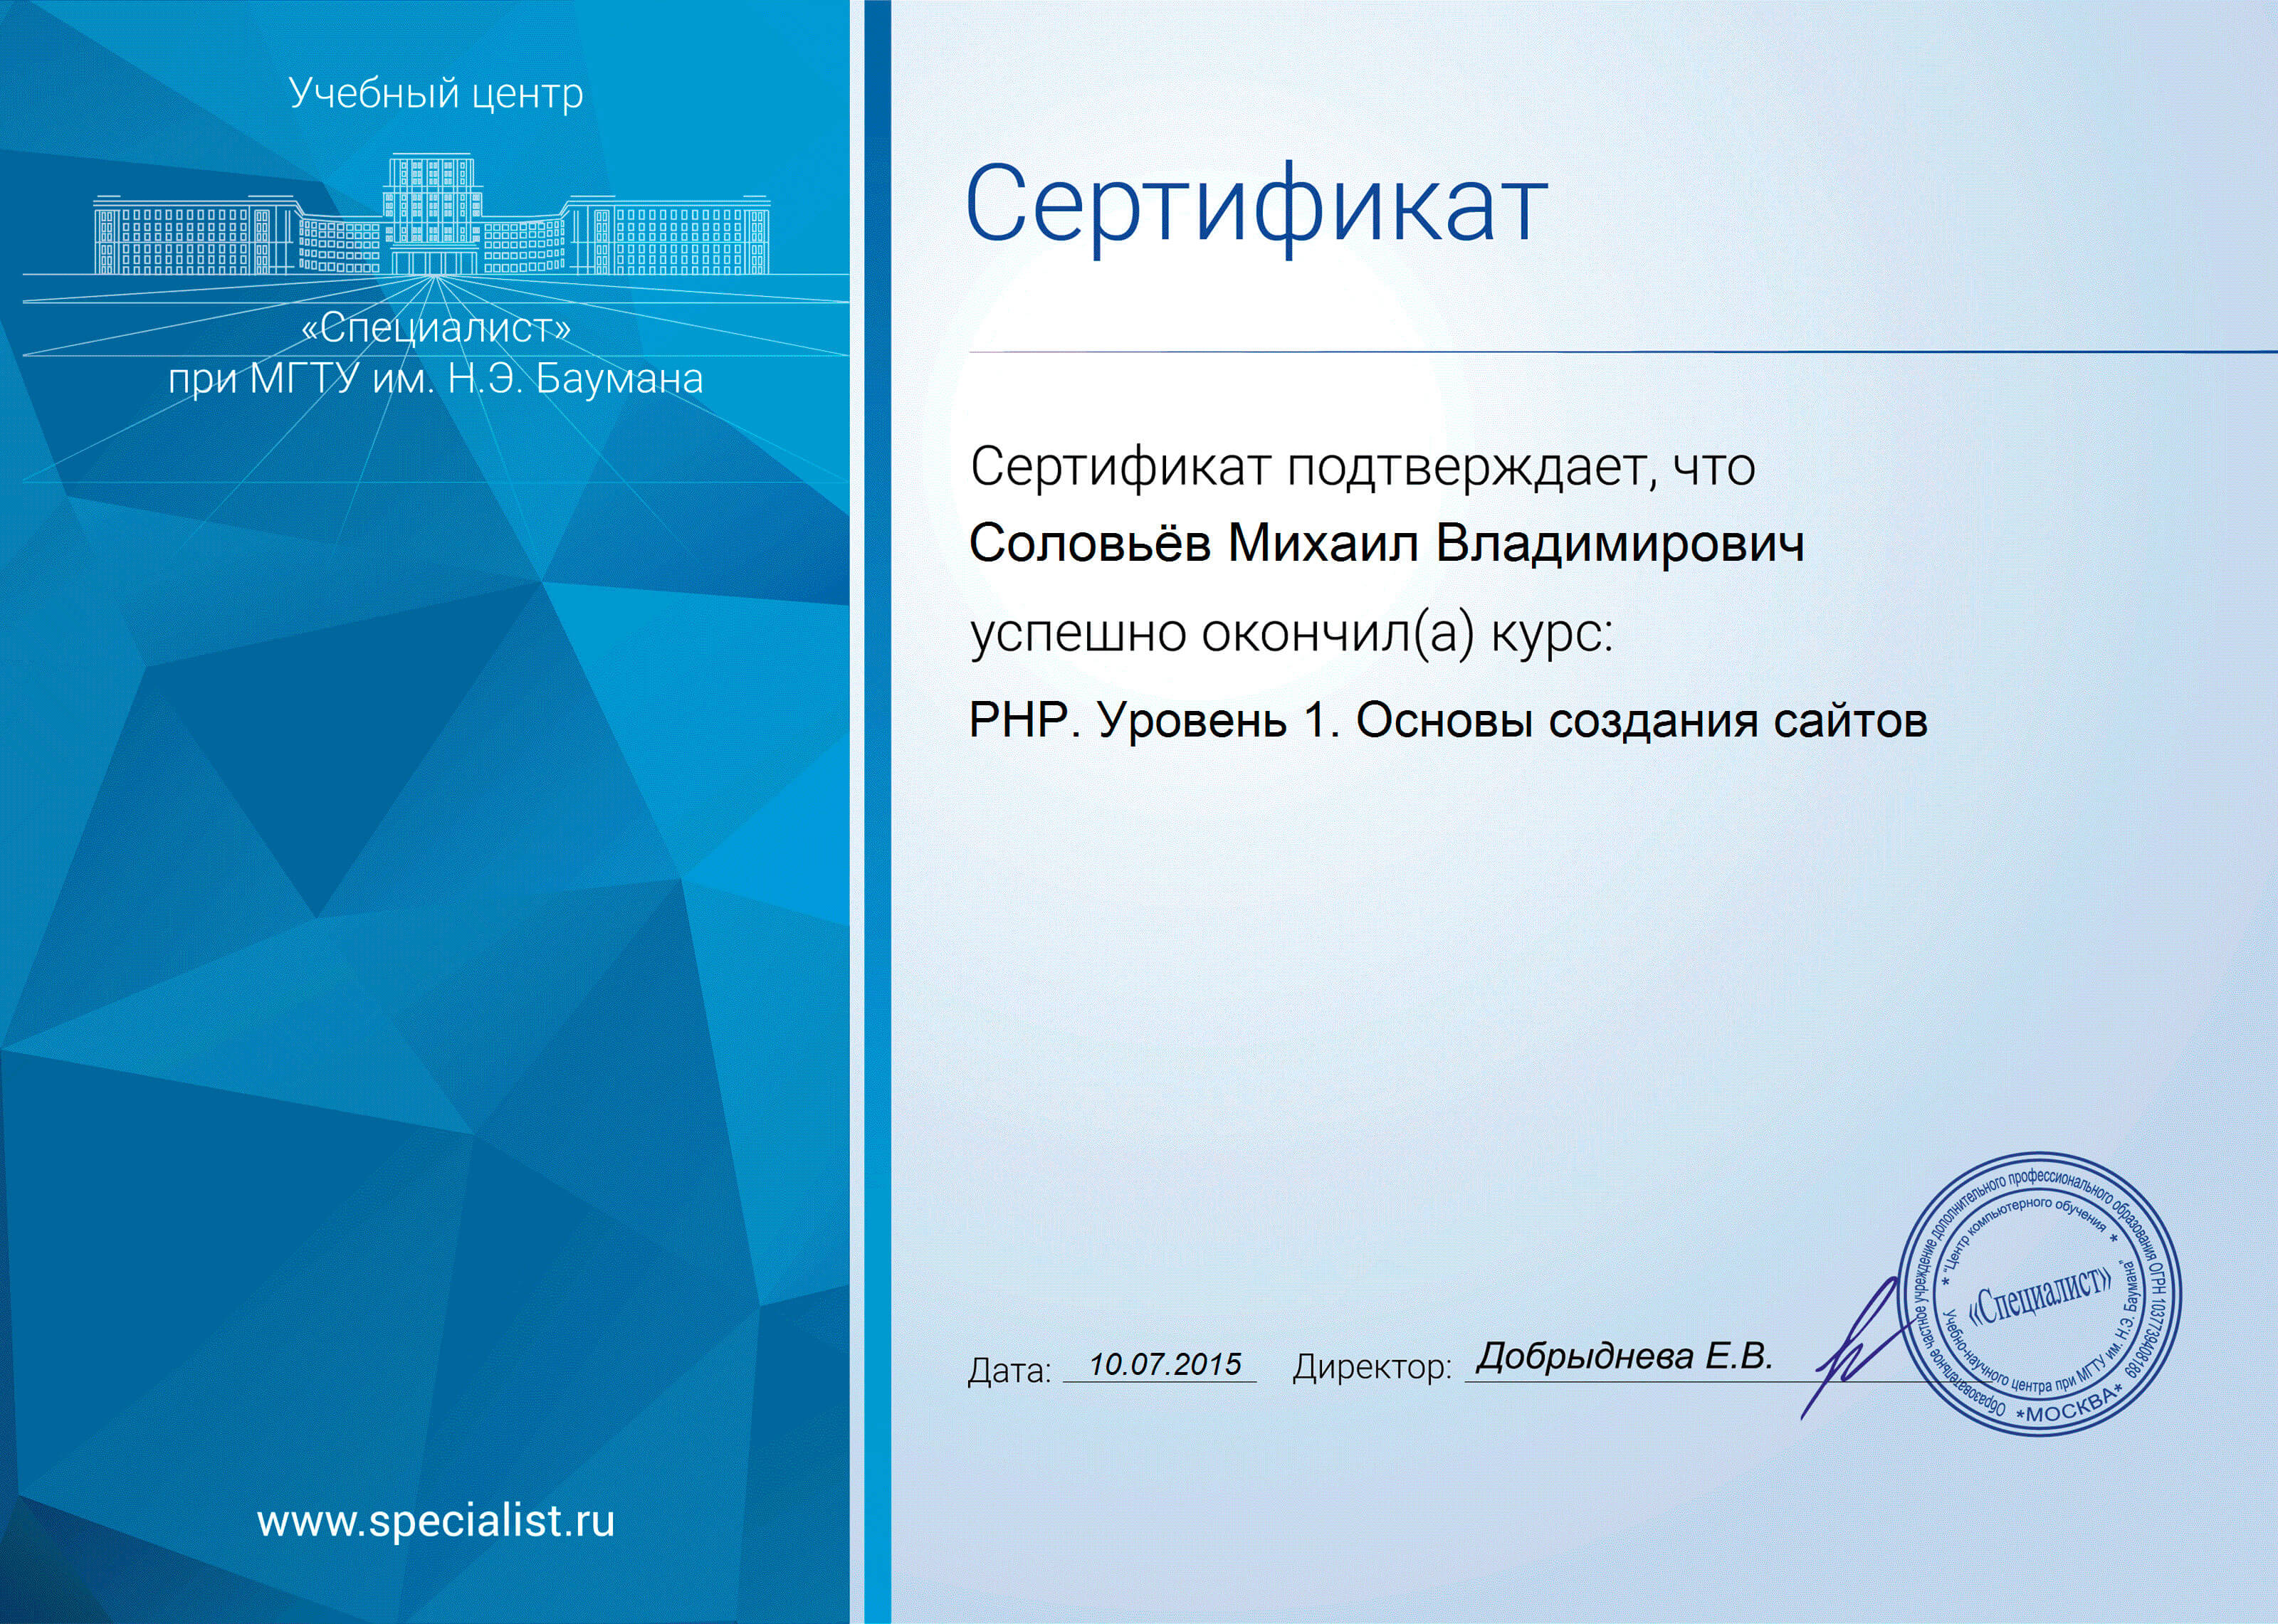 Сертификат “PHP уровень 1”